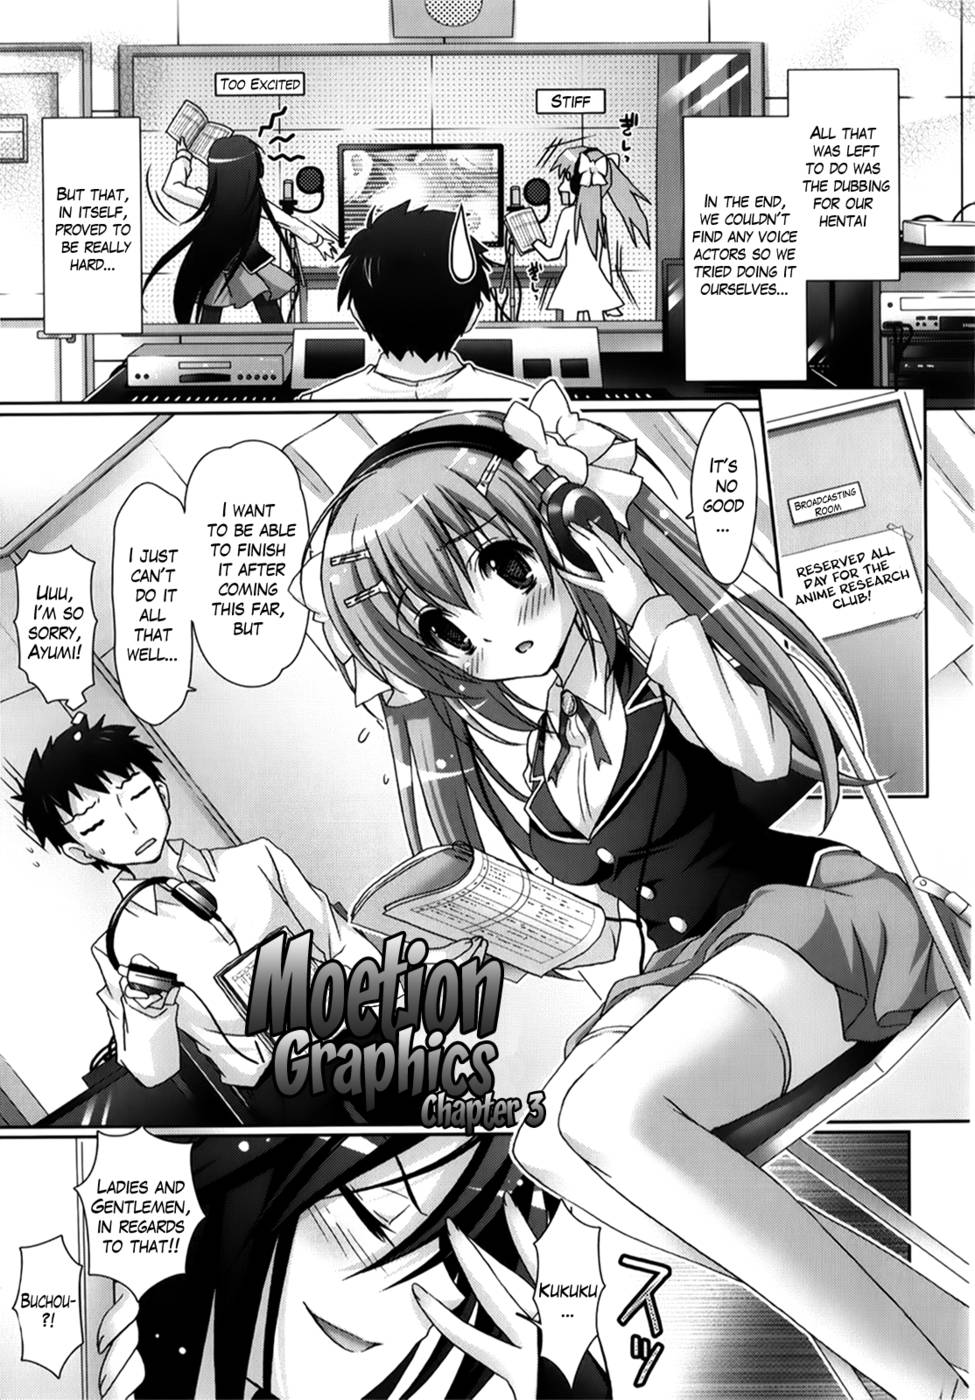 Hentai Manga Comic-Moetion Graphics-Chapter 3-1